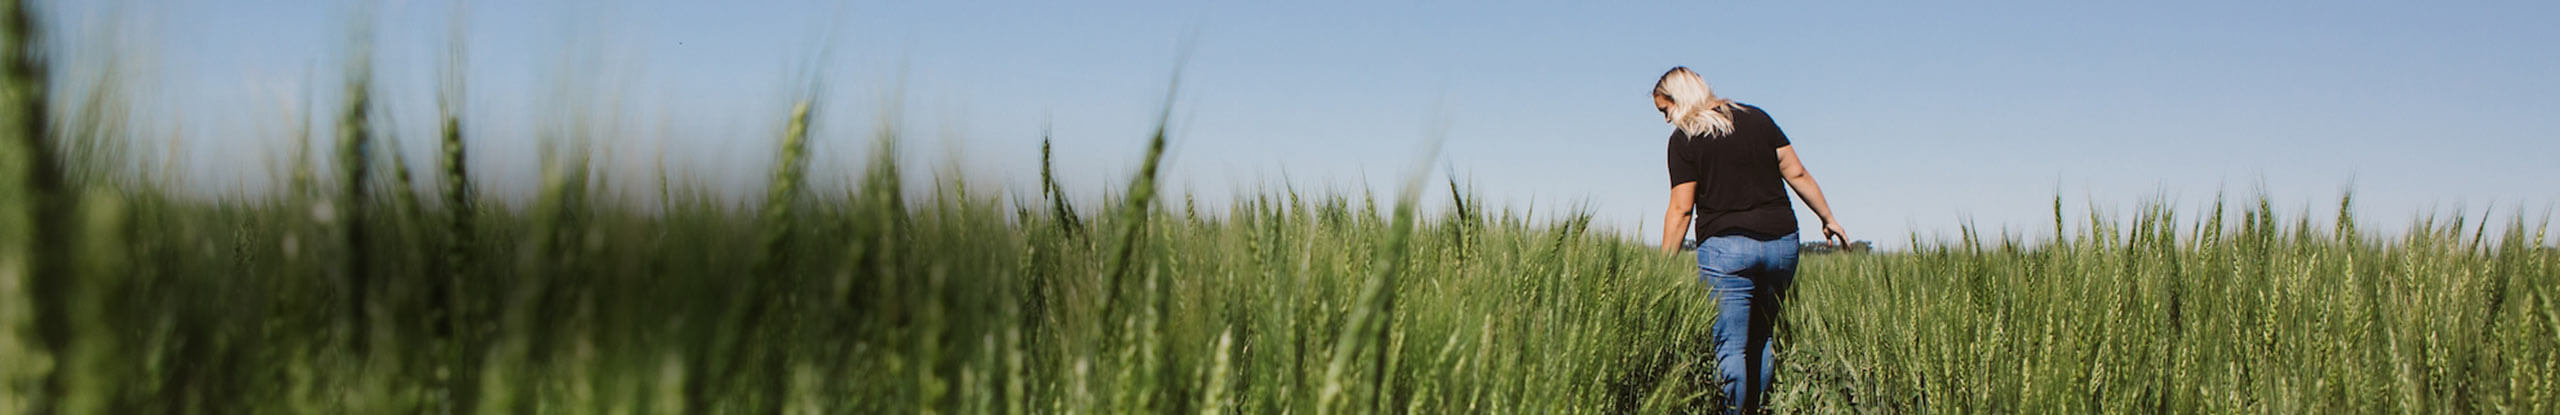 Enhancing fusarium head blight research capacity to reduce mycotoxin contamination in wheat